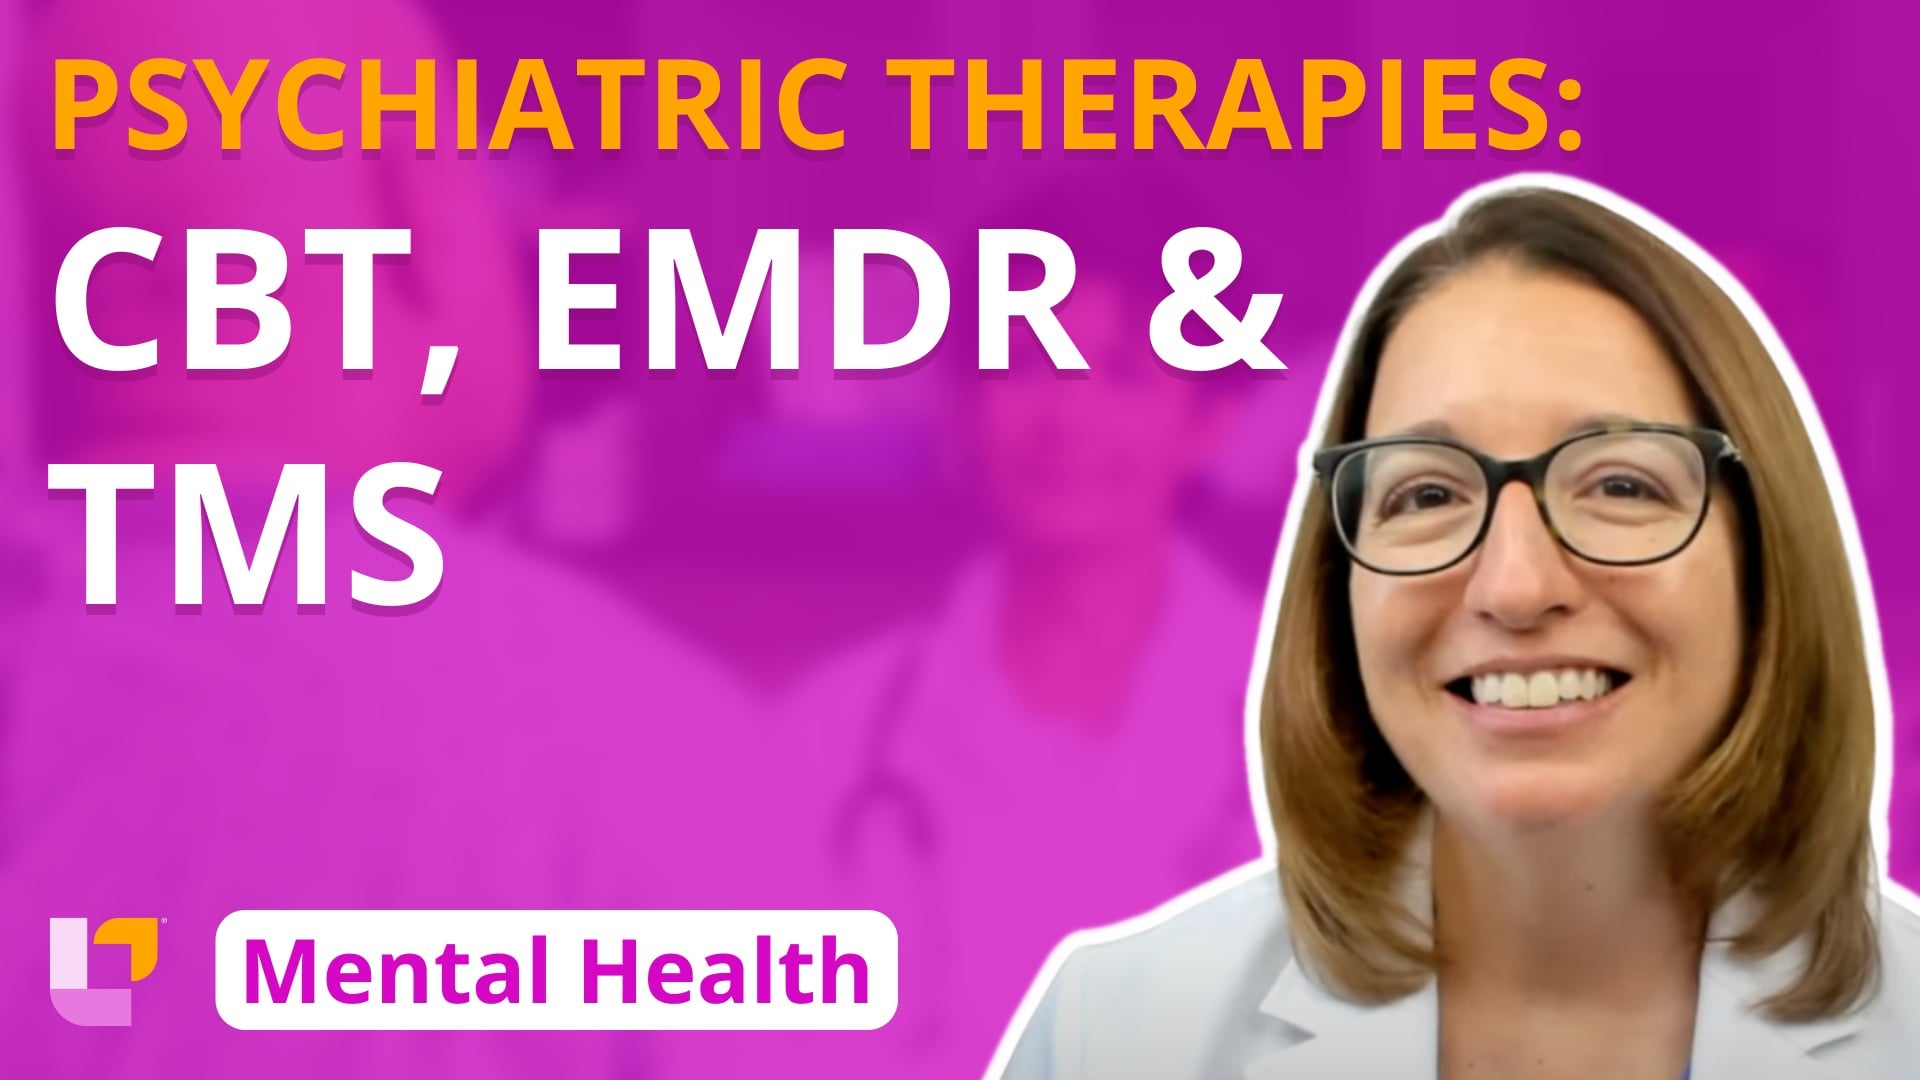 Psychiatric Mental Health - Therapies, part 2: CBT, EMDR, TMS - LevelUpRN